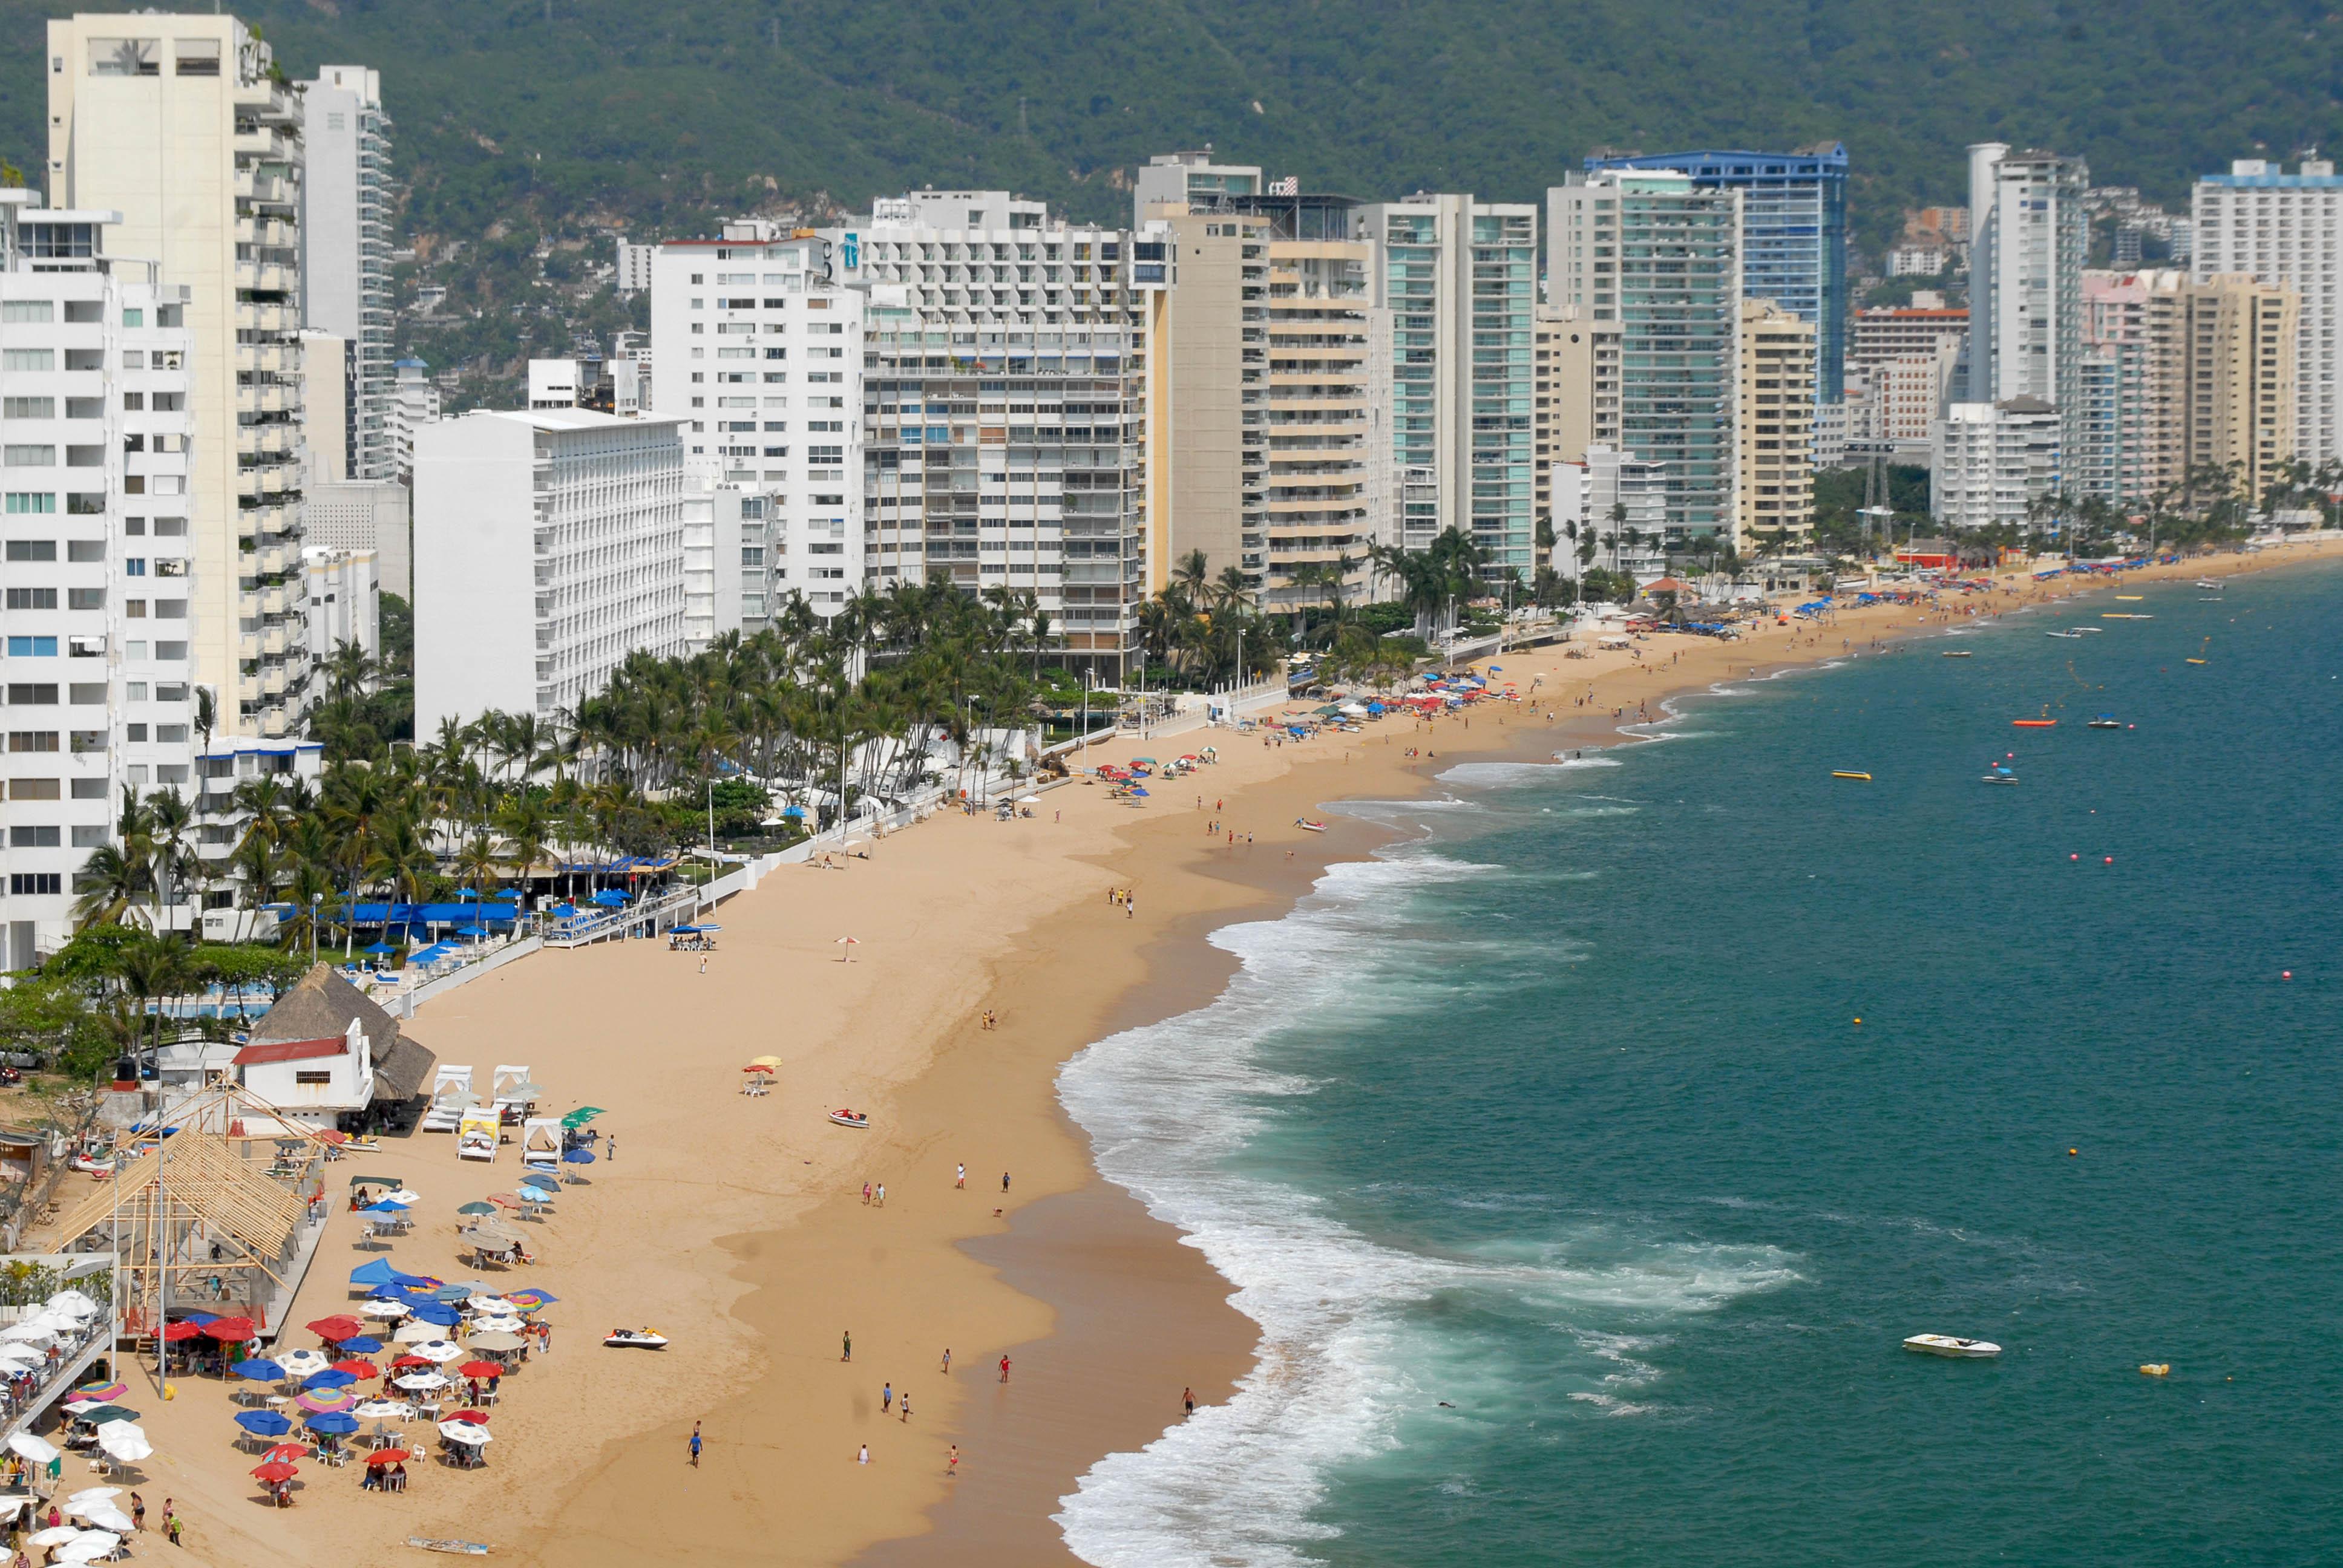 Localizan cadáver flotando en playa de Acapulco - Acapulco News